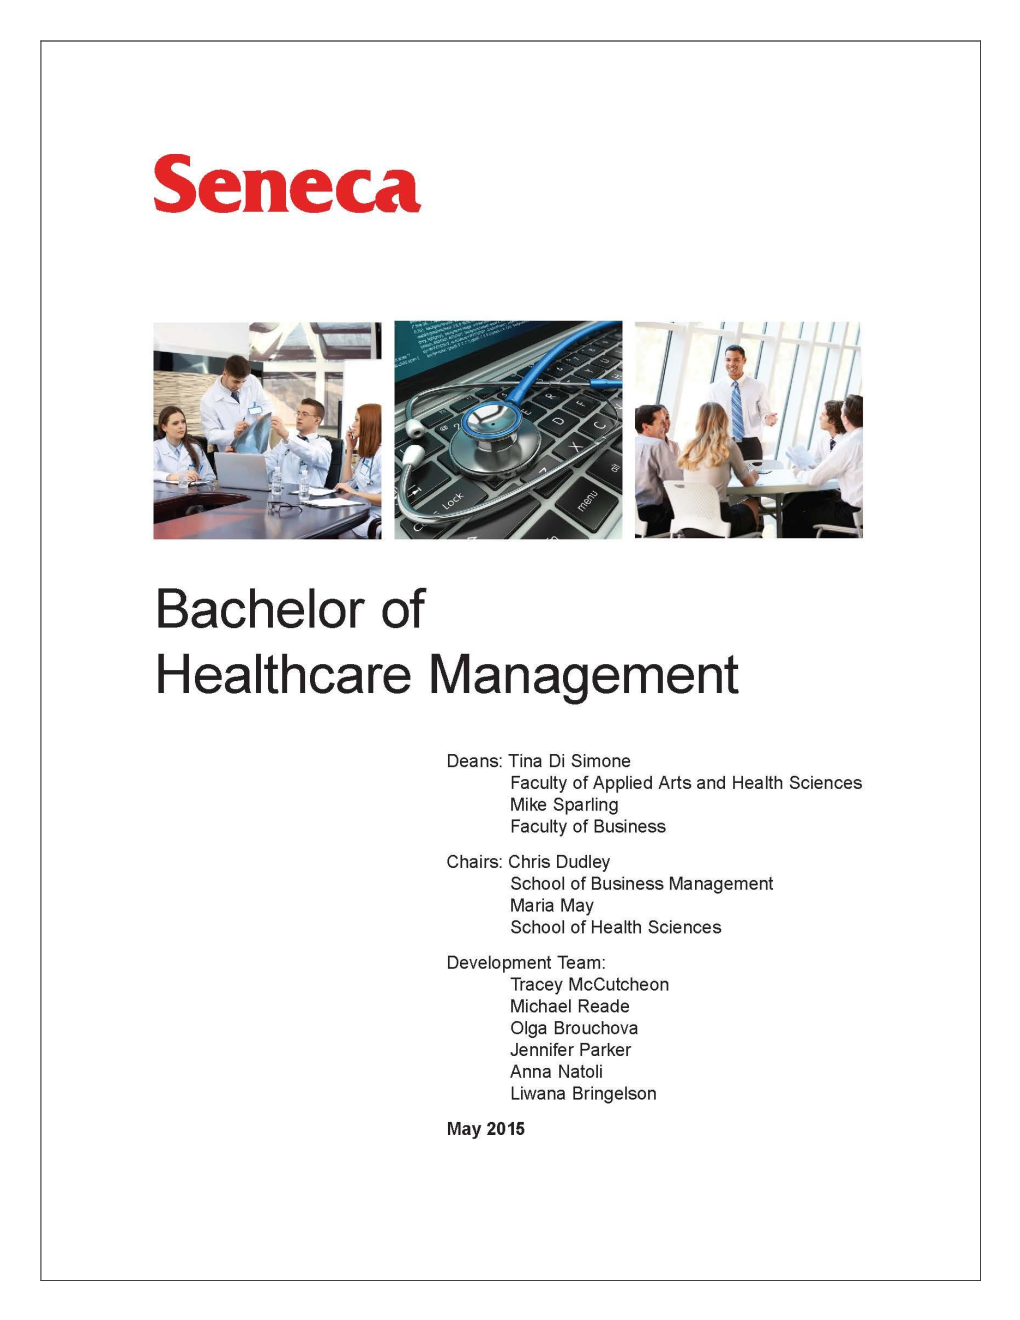 Seneca Bachelor of Healthcare Management